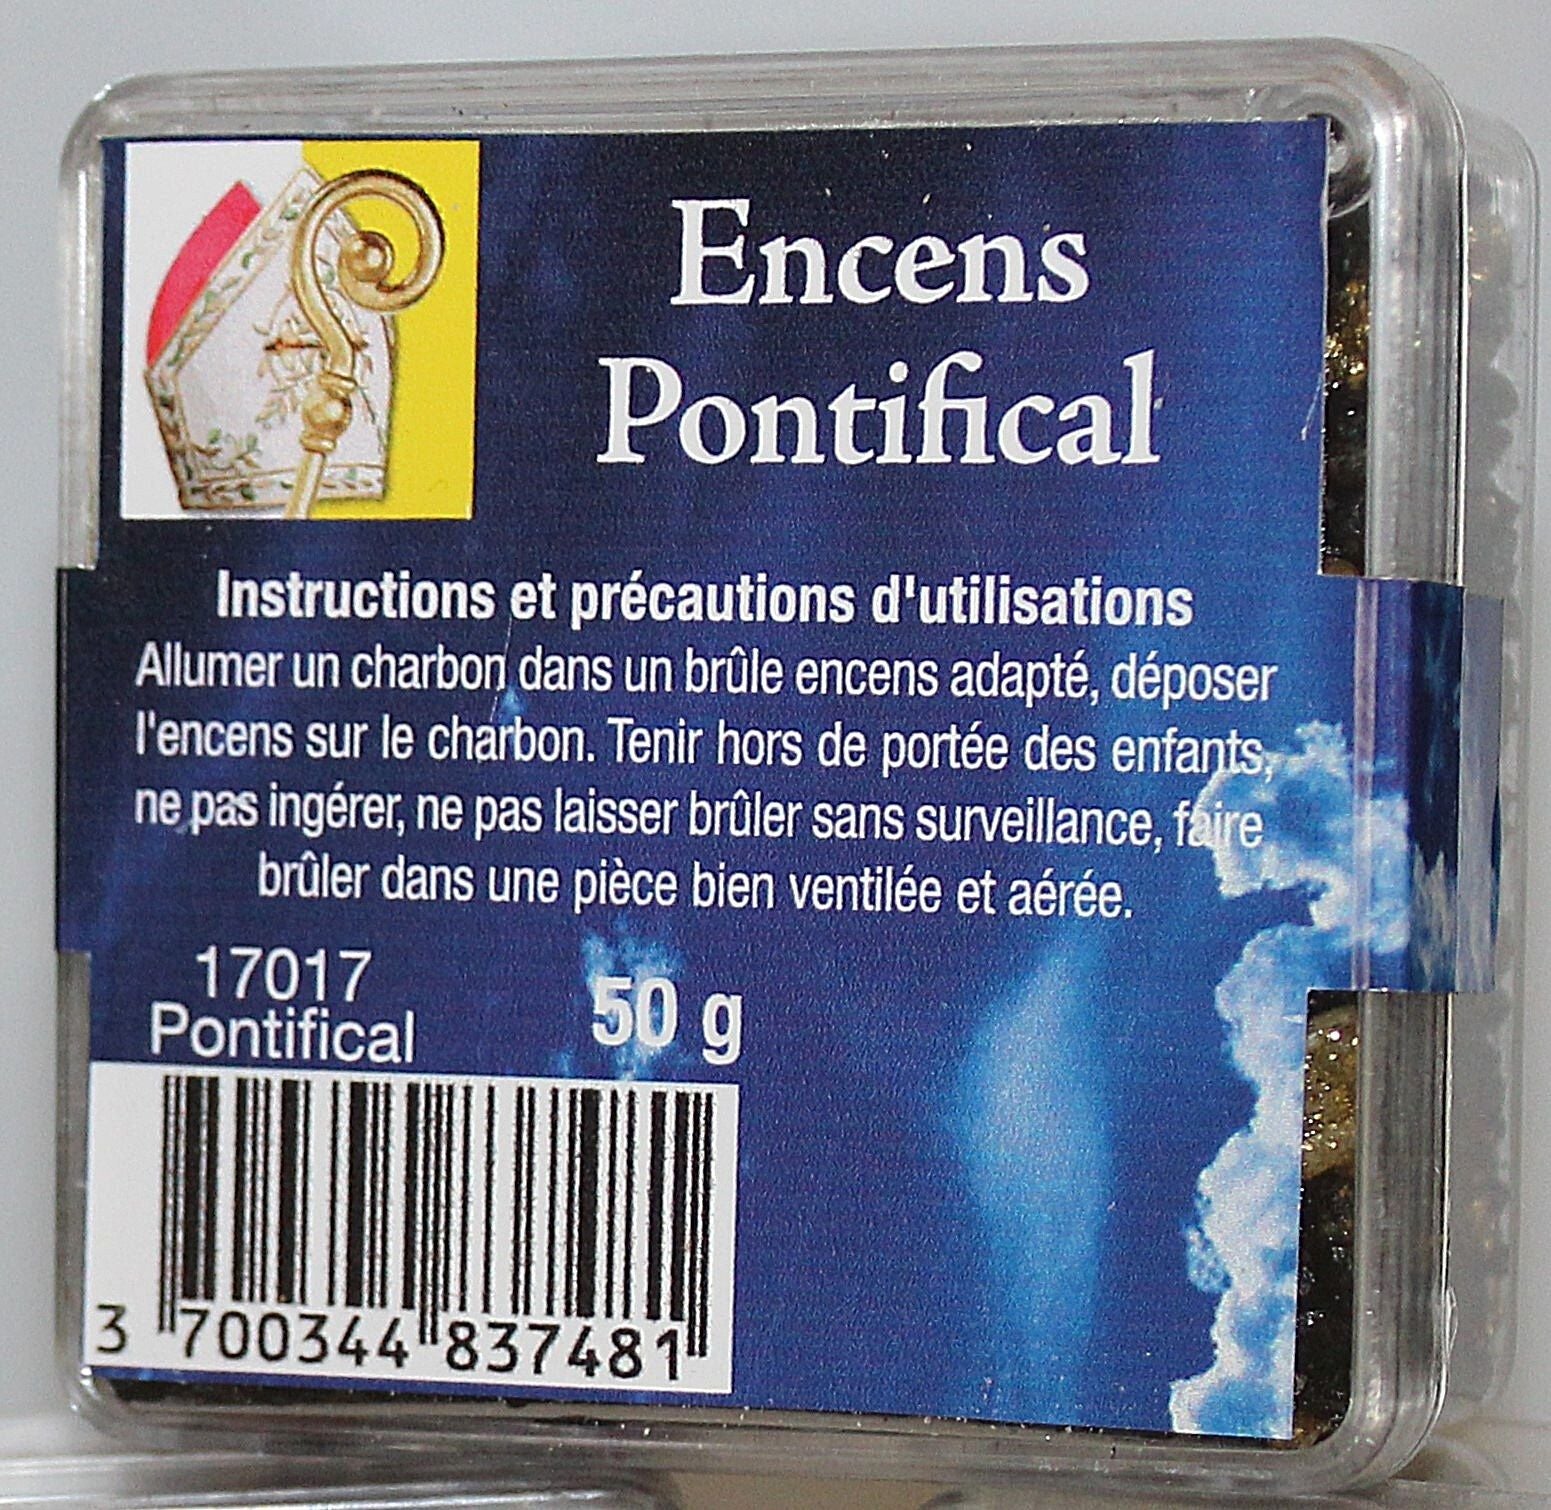 Encens en grains 50 g Pontifical